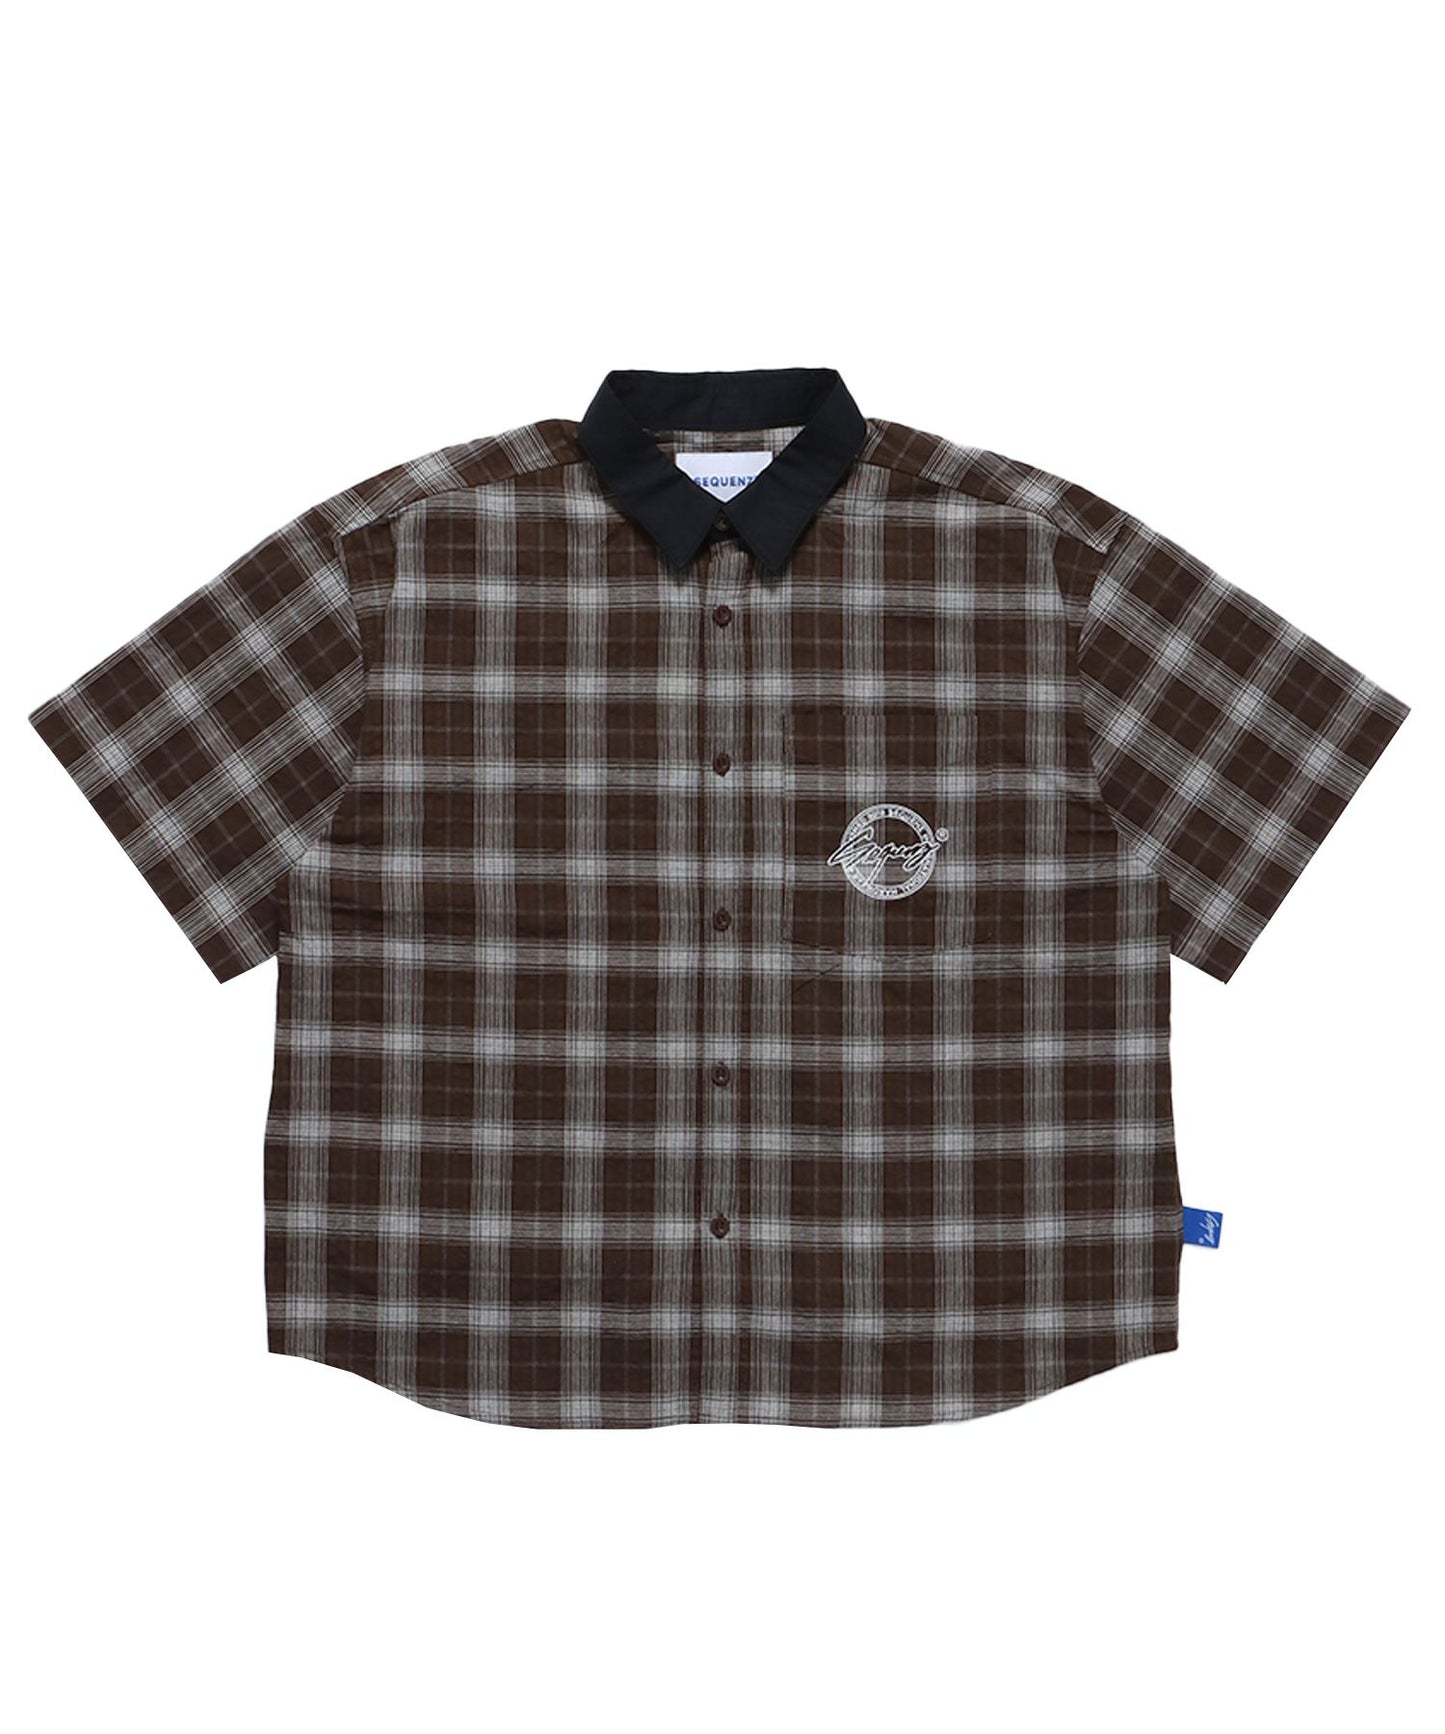 【SEQUENZ】CHECK CLERIC S/S SHIRT / 半袖シャツ オープンカラー オンブレチェック サークルロゴ ブランド ワンポイント 柄82